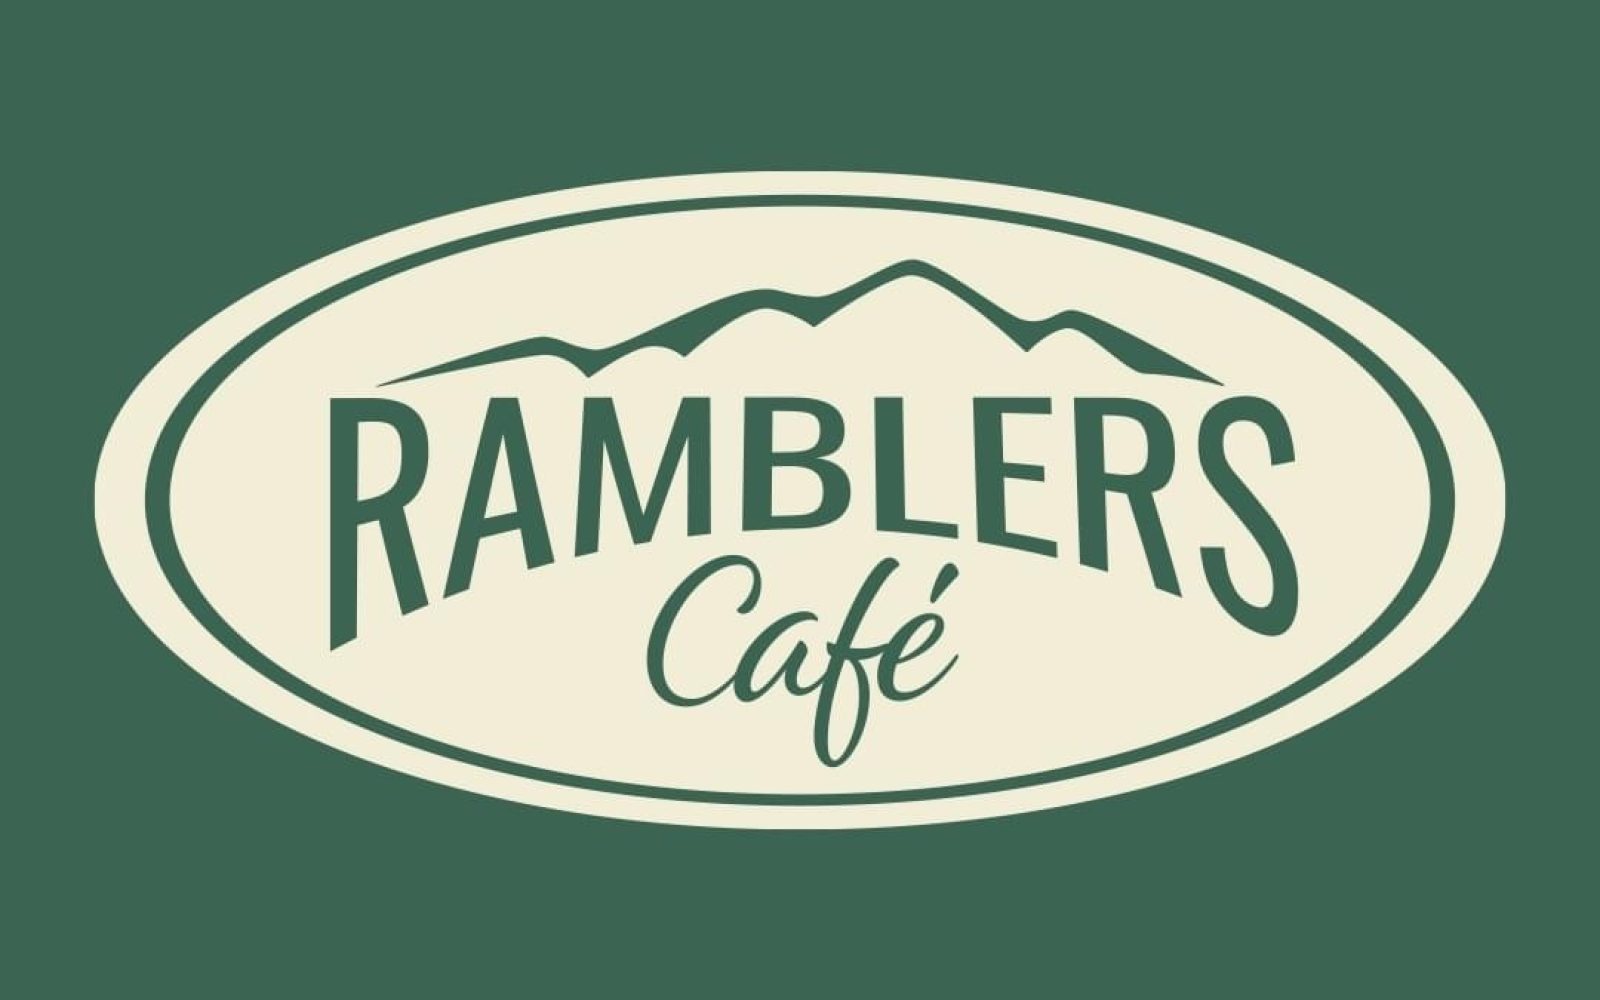 Ramblers Logo